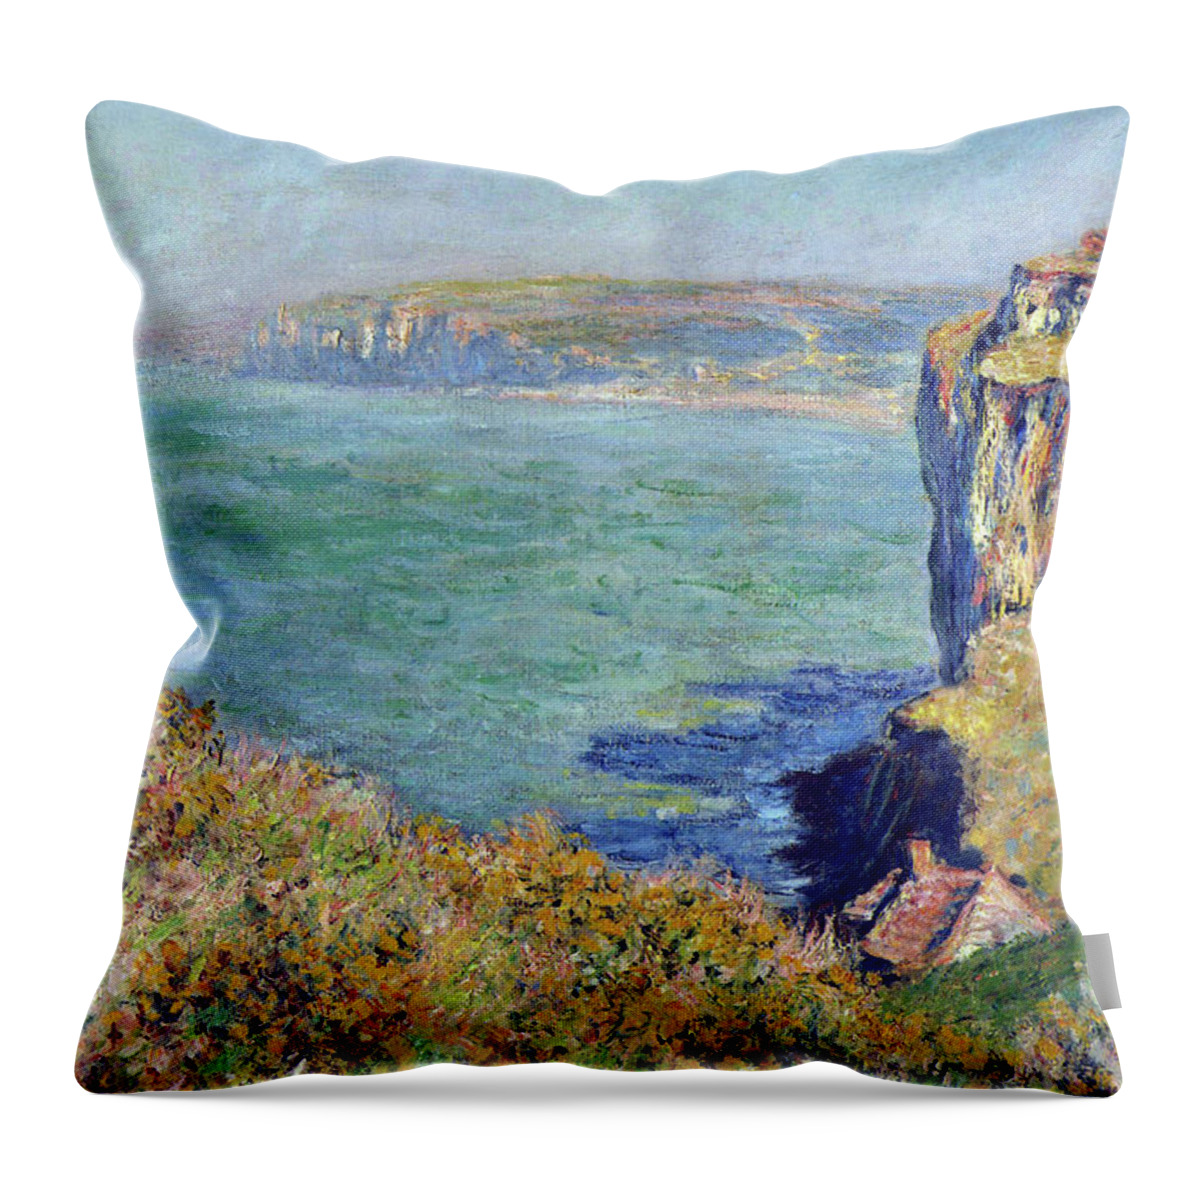 Monet Throw Pillow featuring the painting Cliffs at Varengeville by Claude Monet